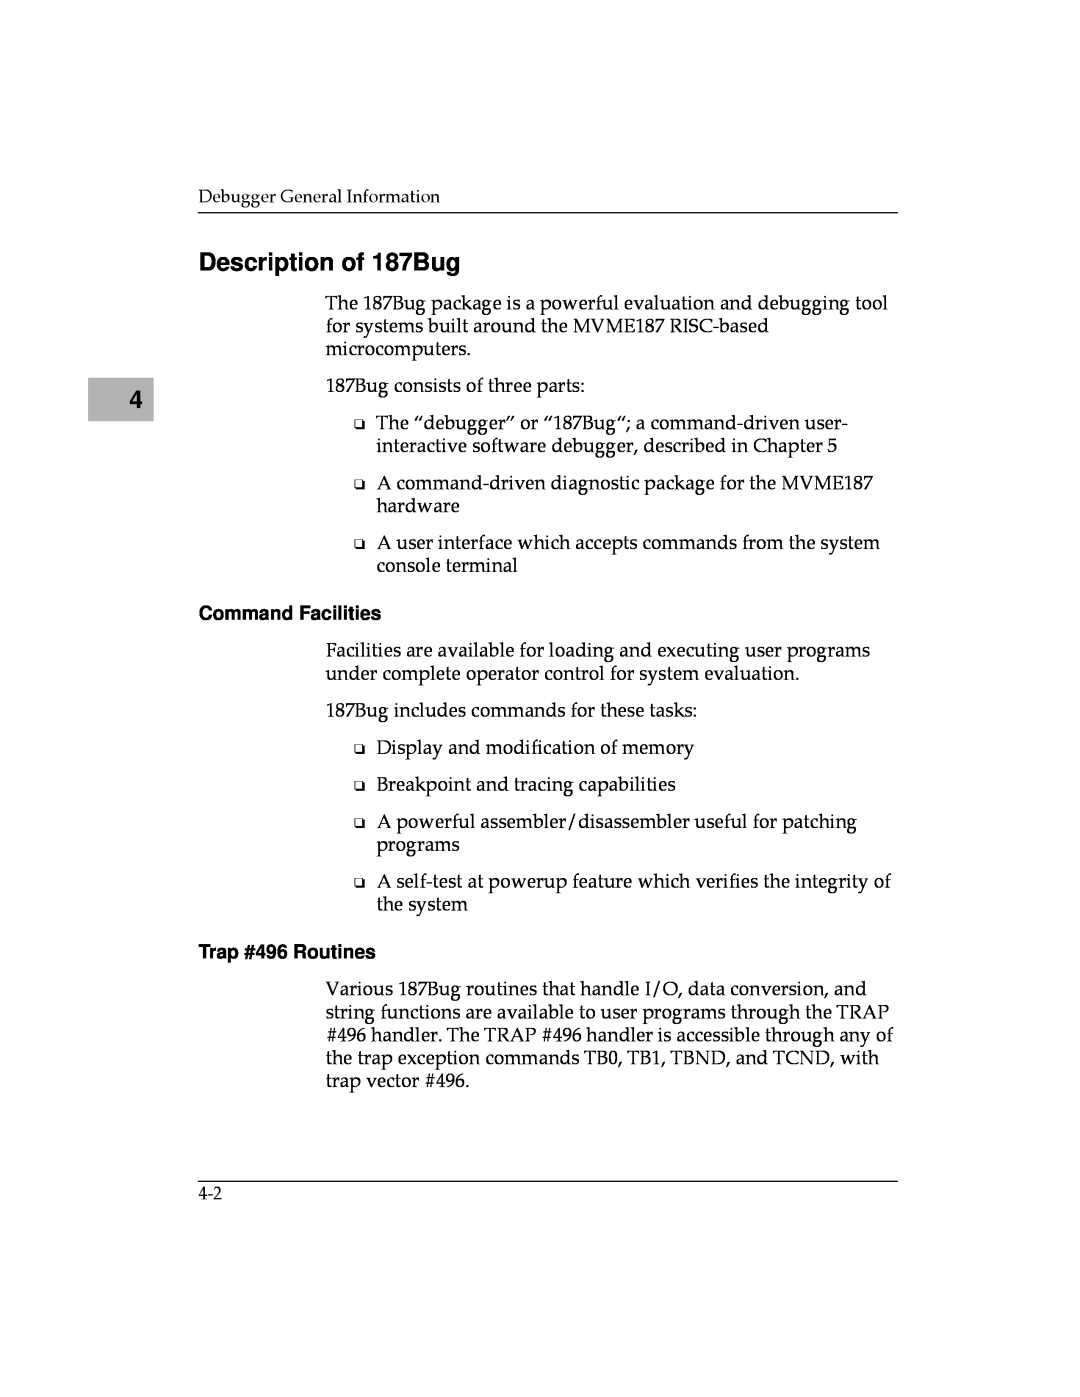 Motorola MVME187 manual Description of 187Bug, Command Facilities, Trap #496 Routines 